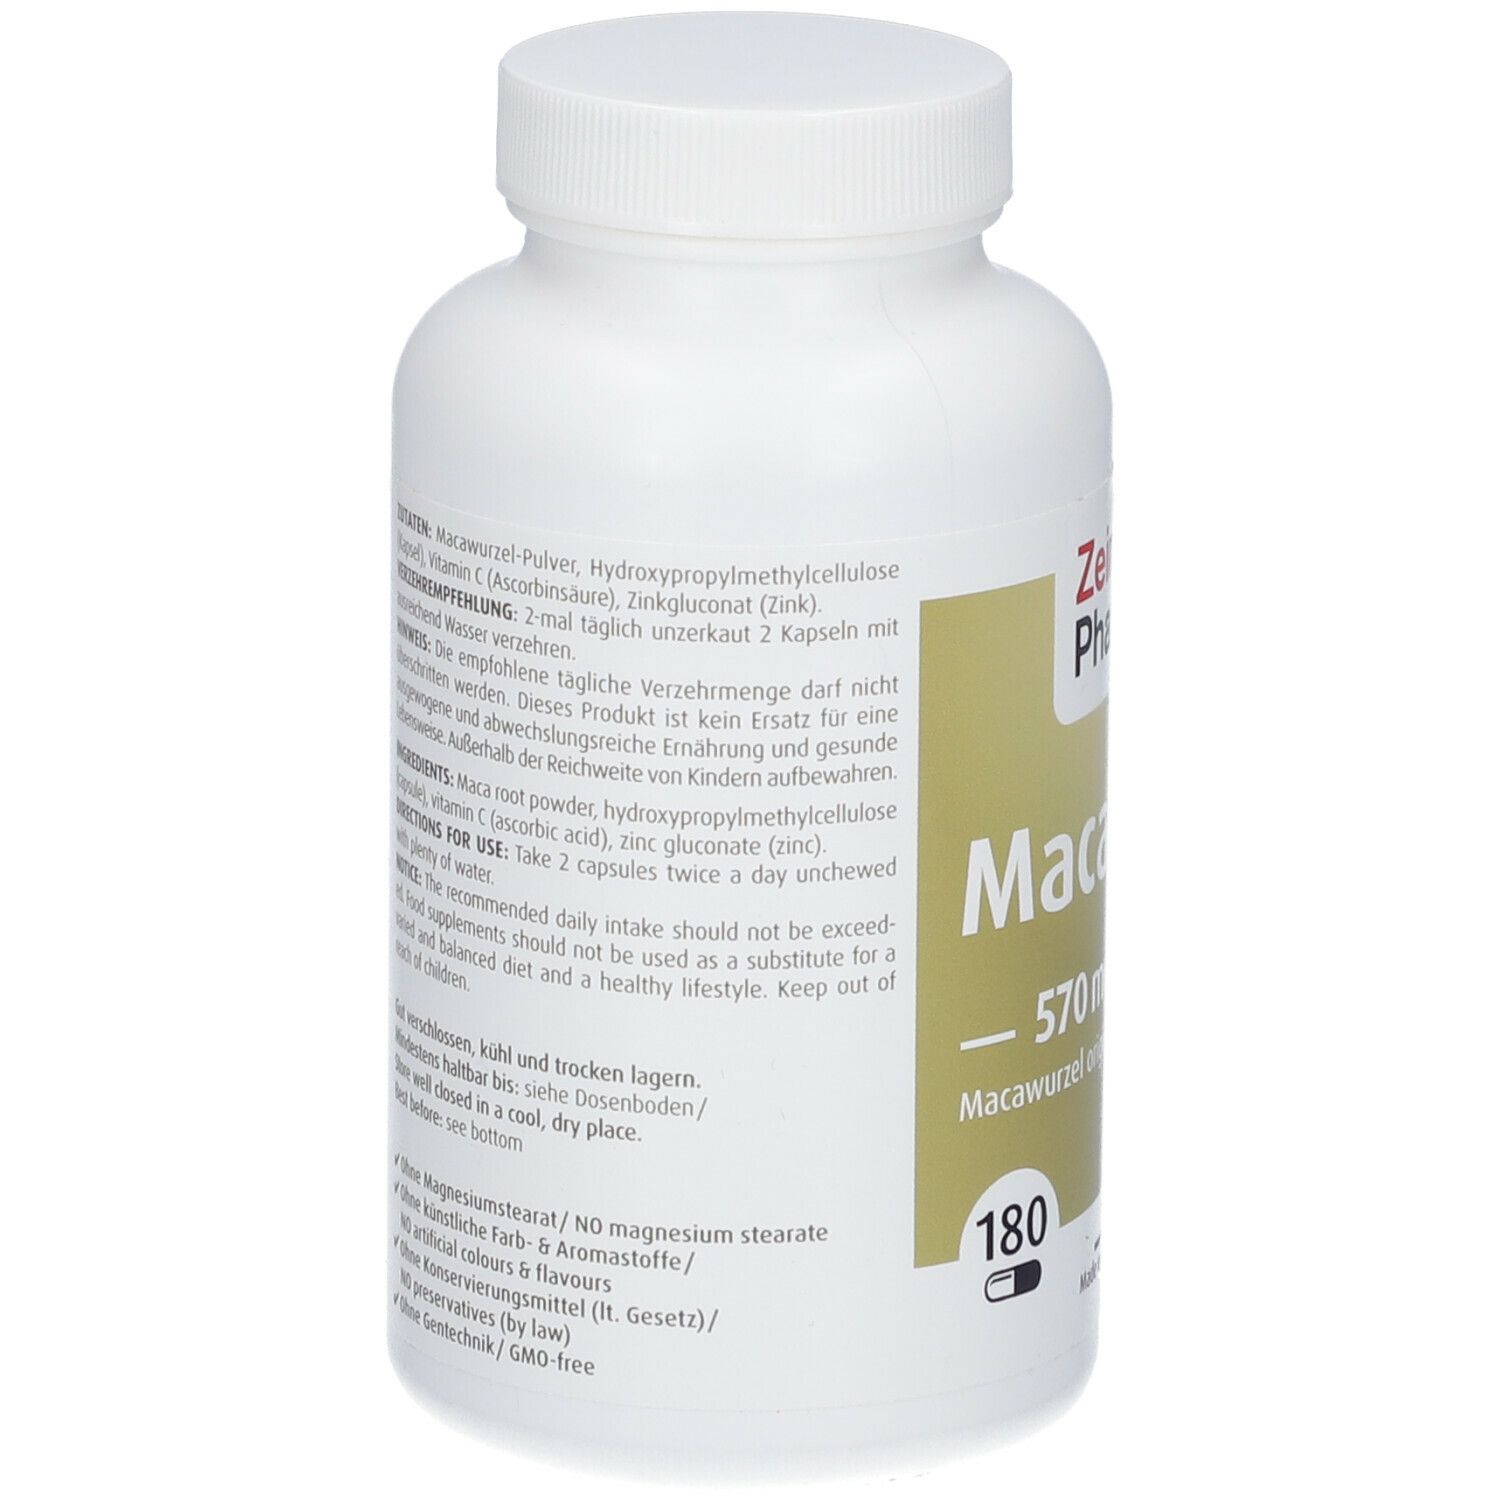 MACA Kapseln GOLD 570 mg ZeinPharma